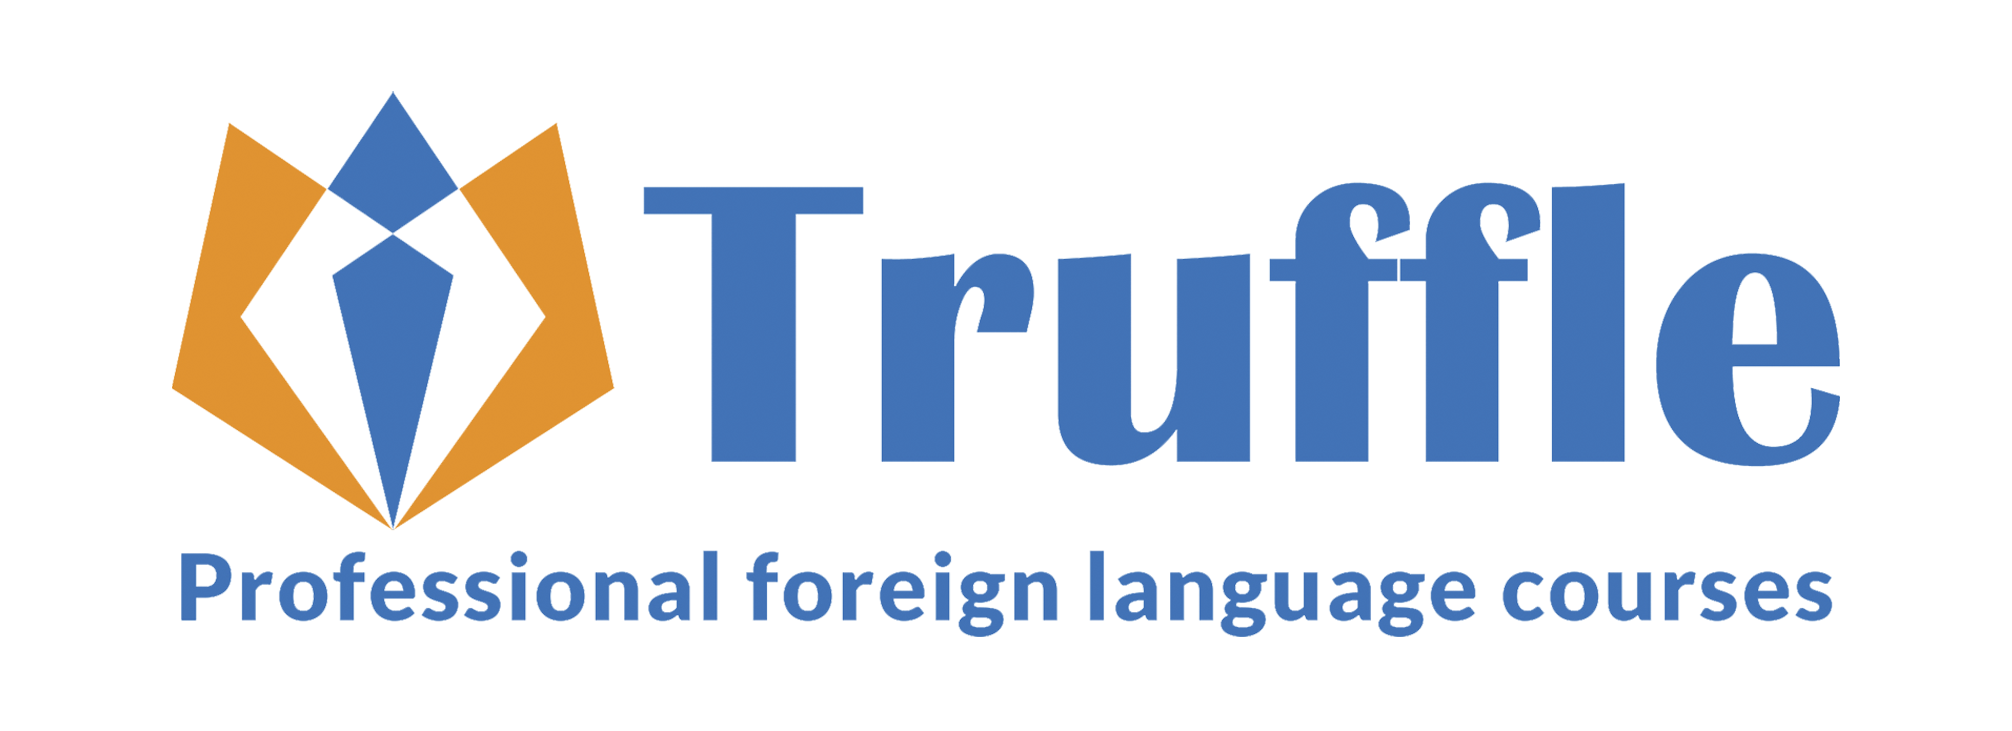 Truffle Logo